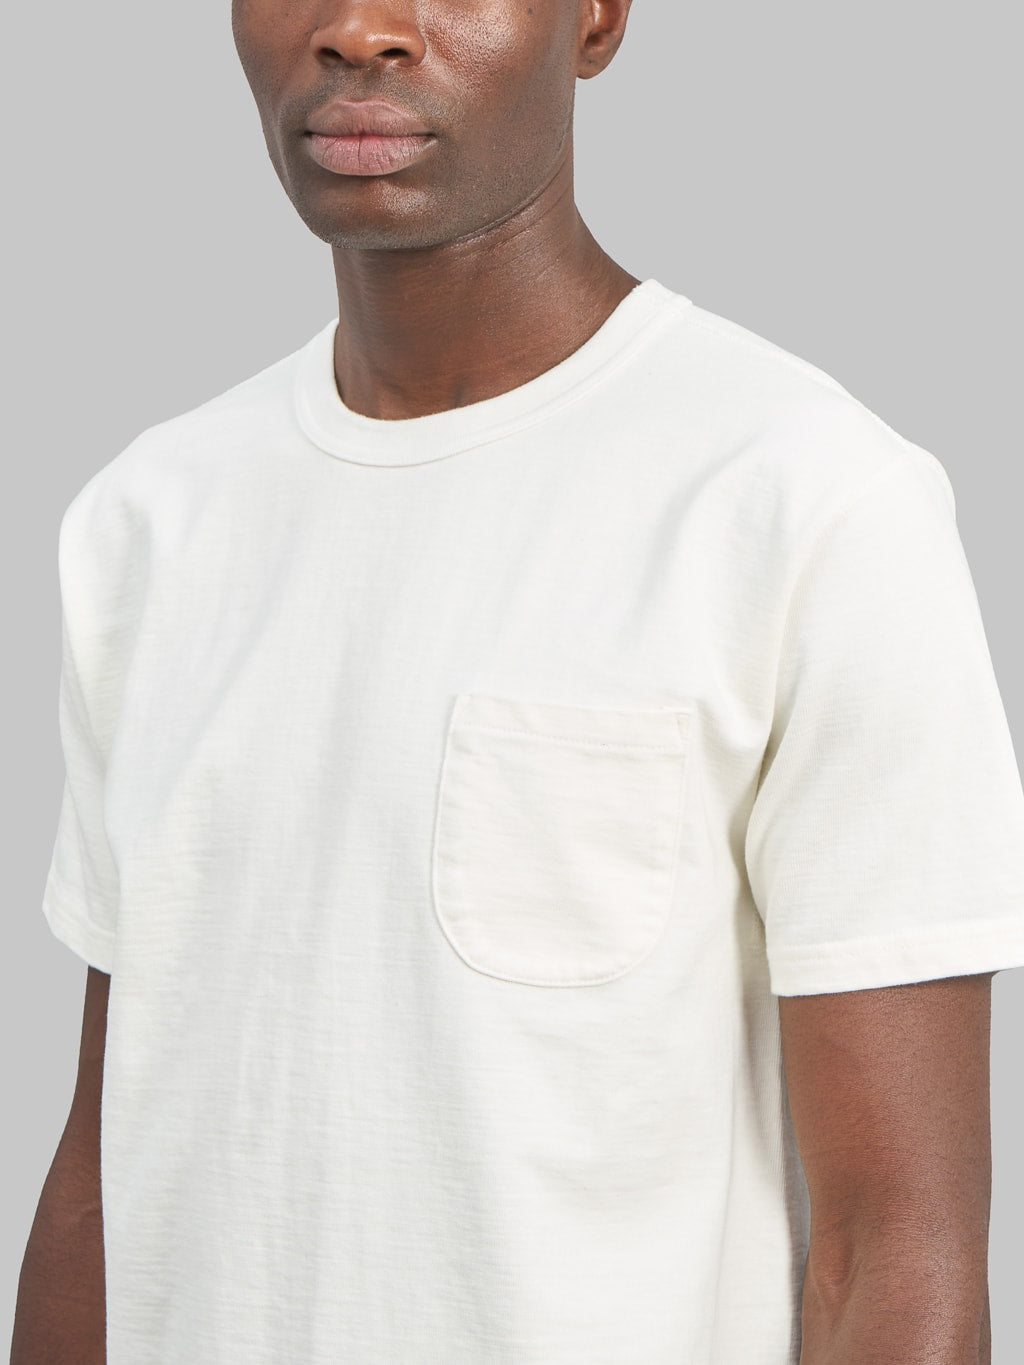 Studio DArtisan Suvin Gold Loopwheeled Tshirt white chest pocket